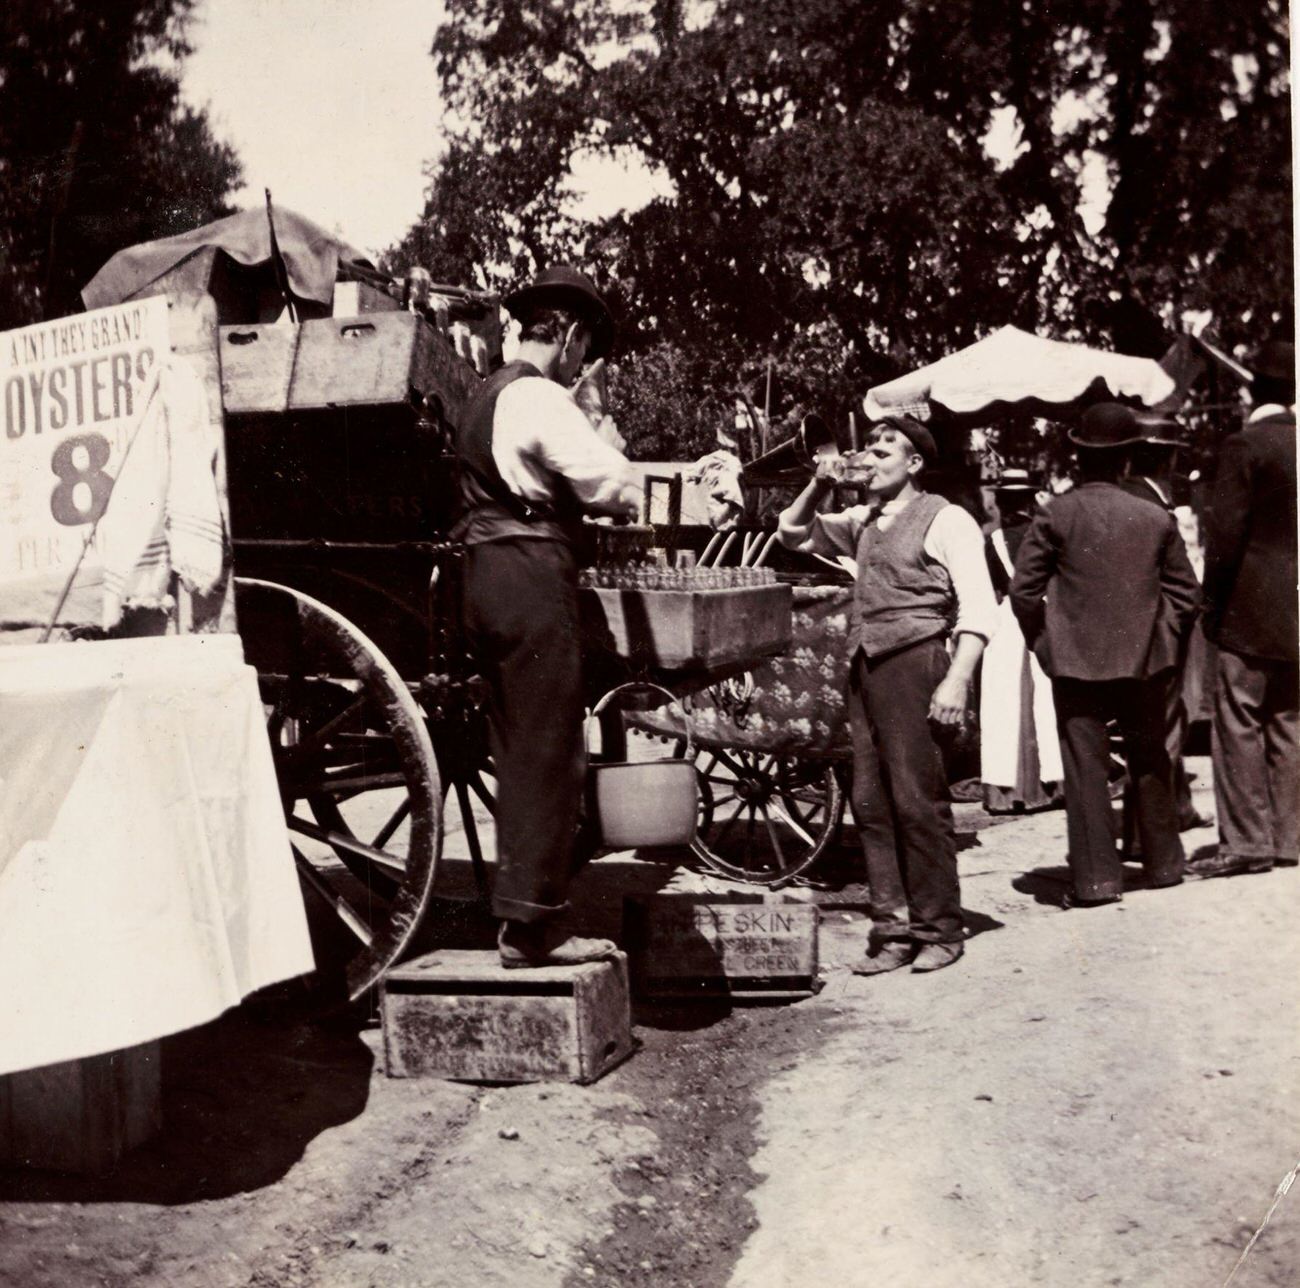 Men at a fairground drinks stall, circa 1898.